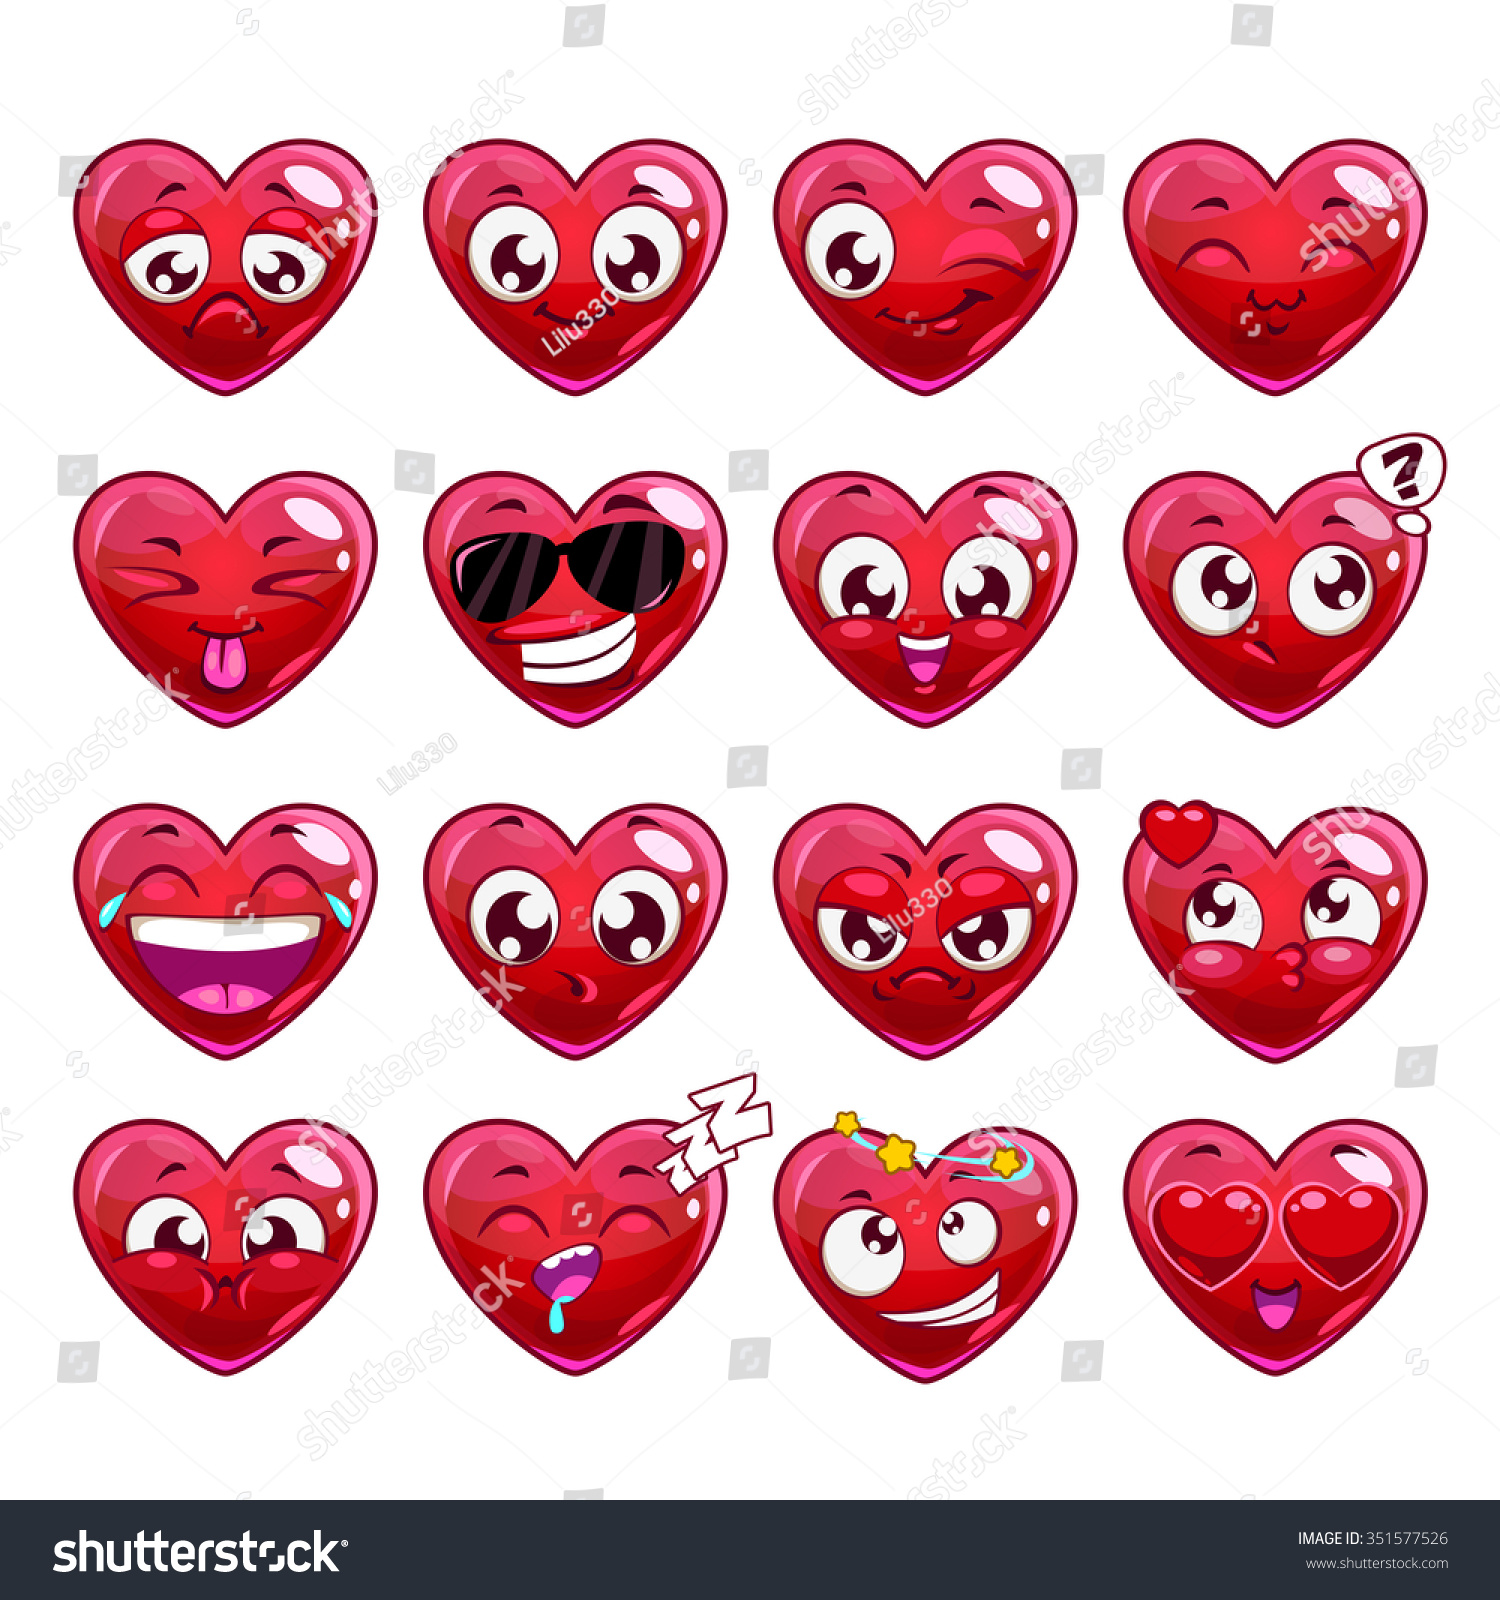 Funny Cartoon Heart Character Emotions Set Stock Vector 351577526 - Shutterstock1500 x 1600